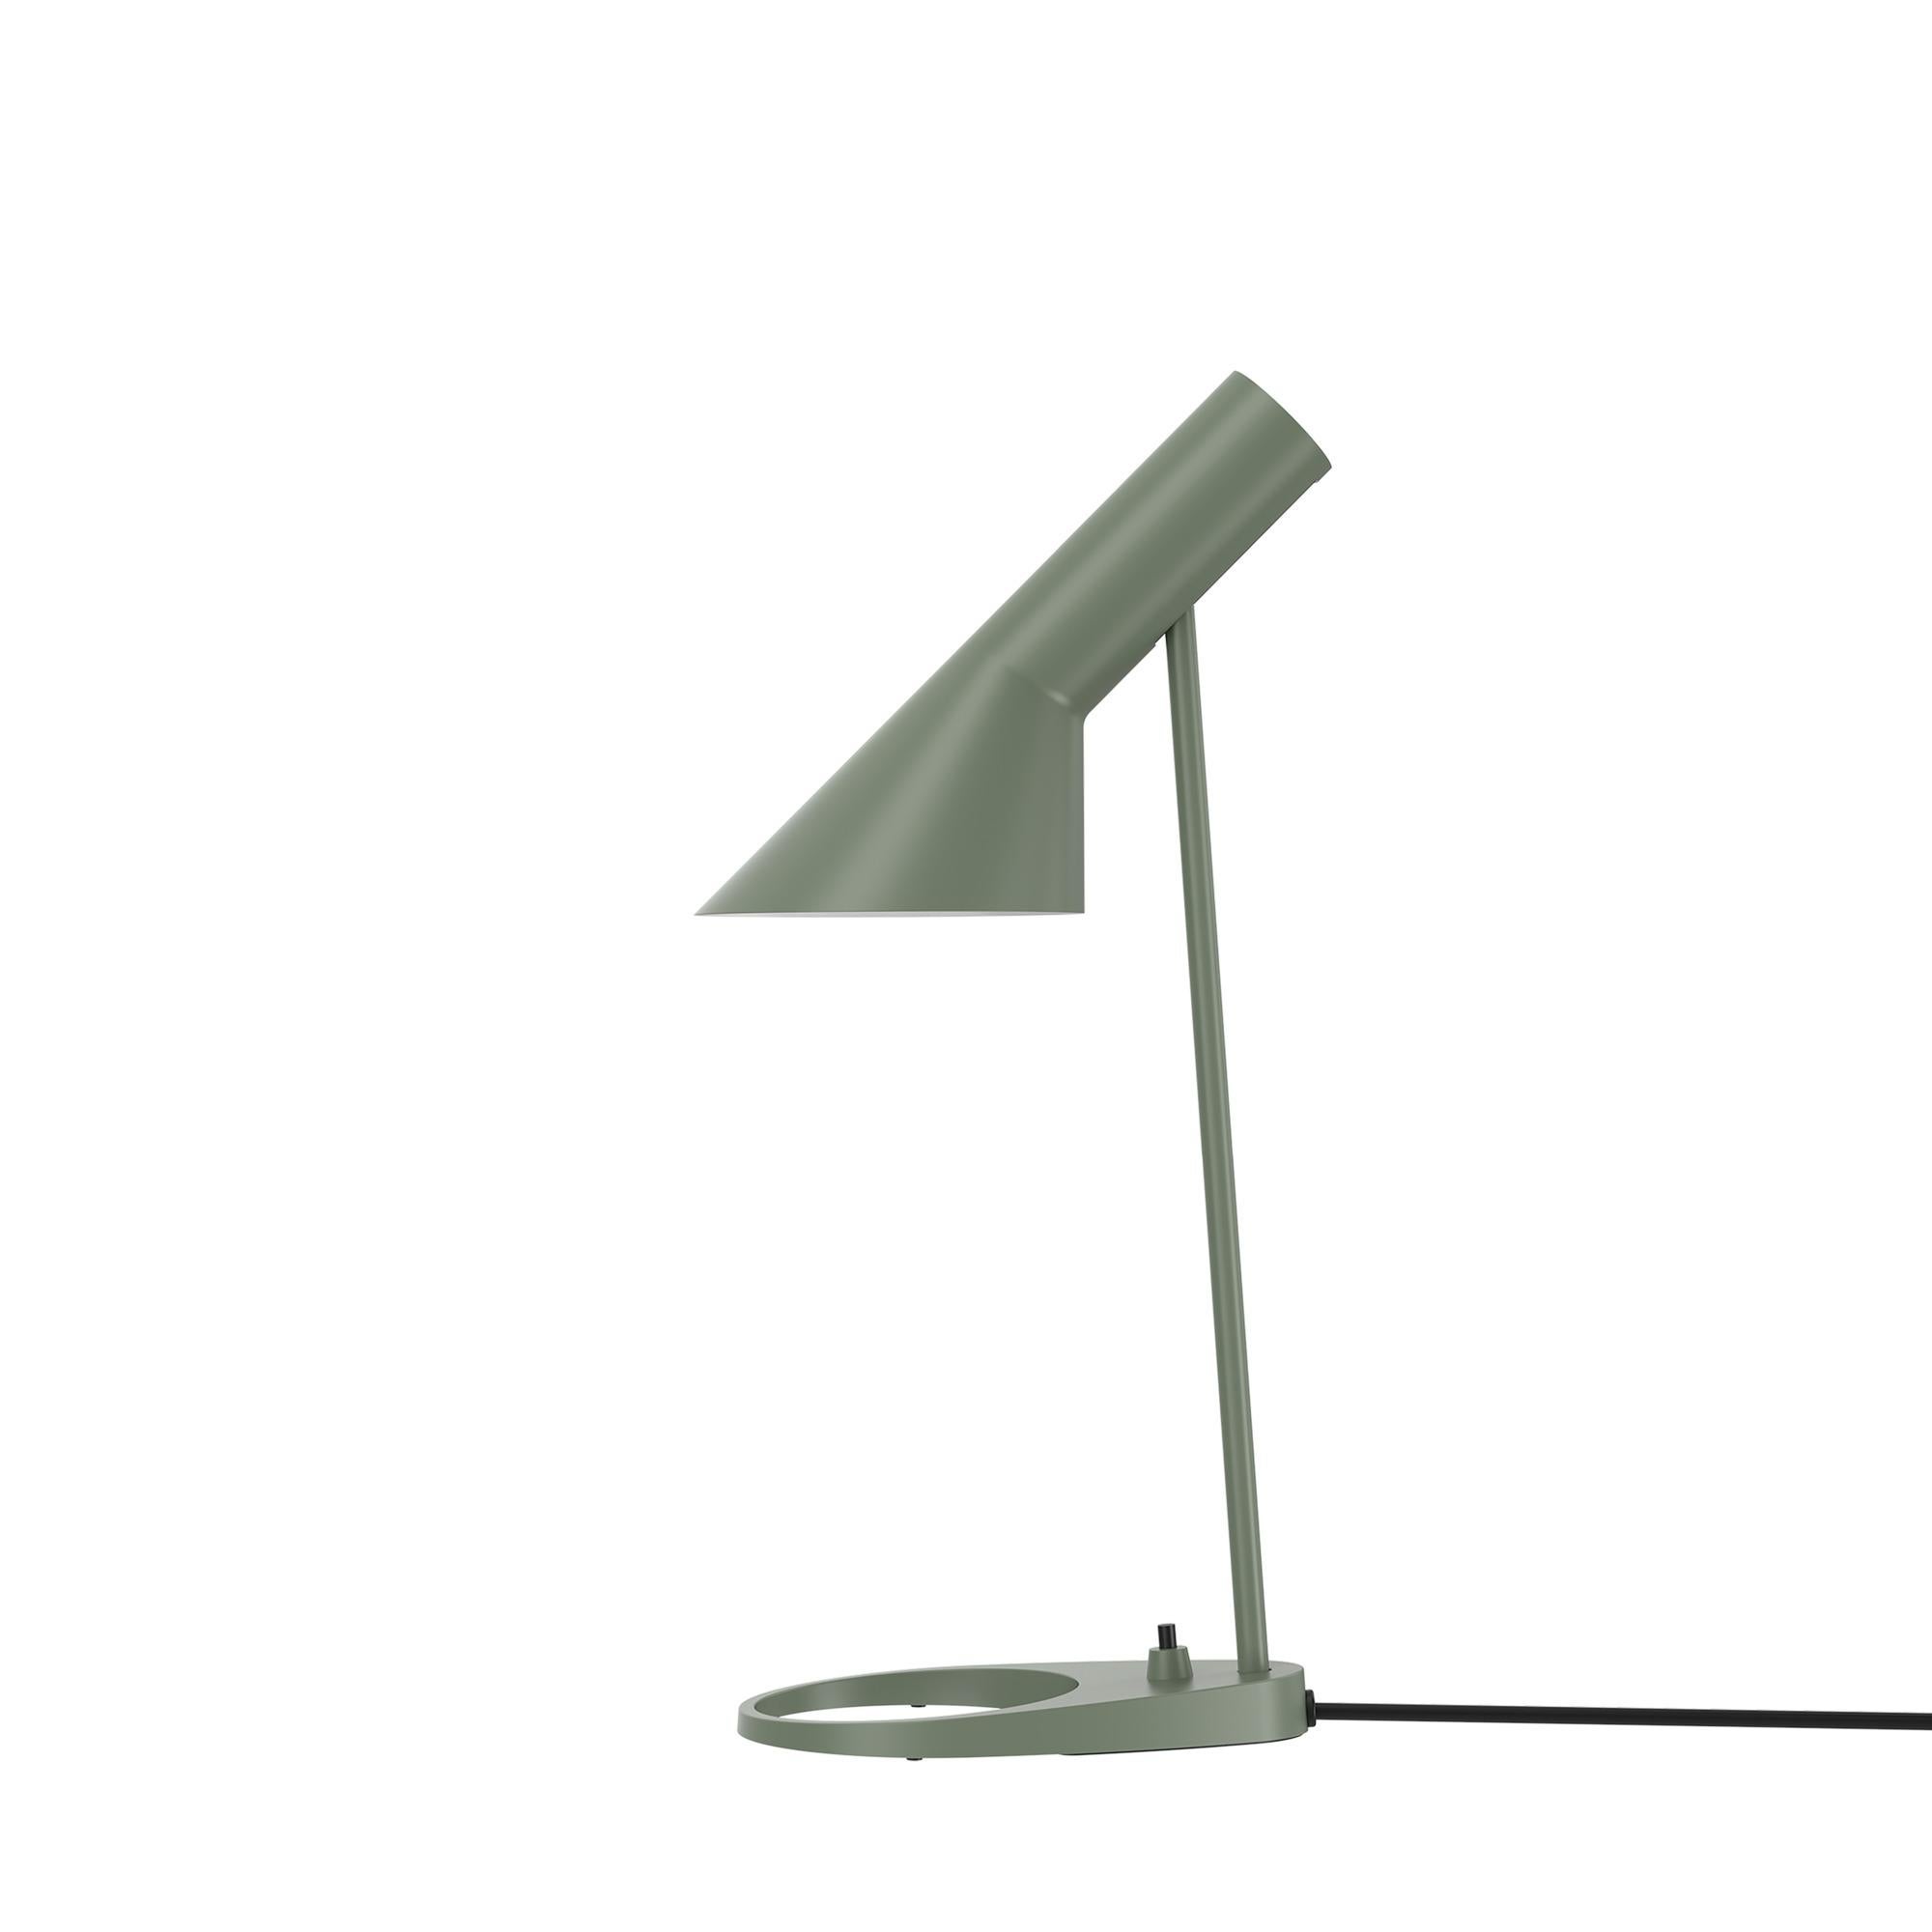 Arne Jacobsen 'Aj Mini' Table Lamp in Electric Orange for Louis Poulsen For Sale 5